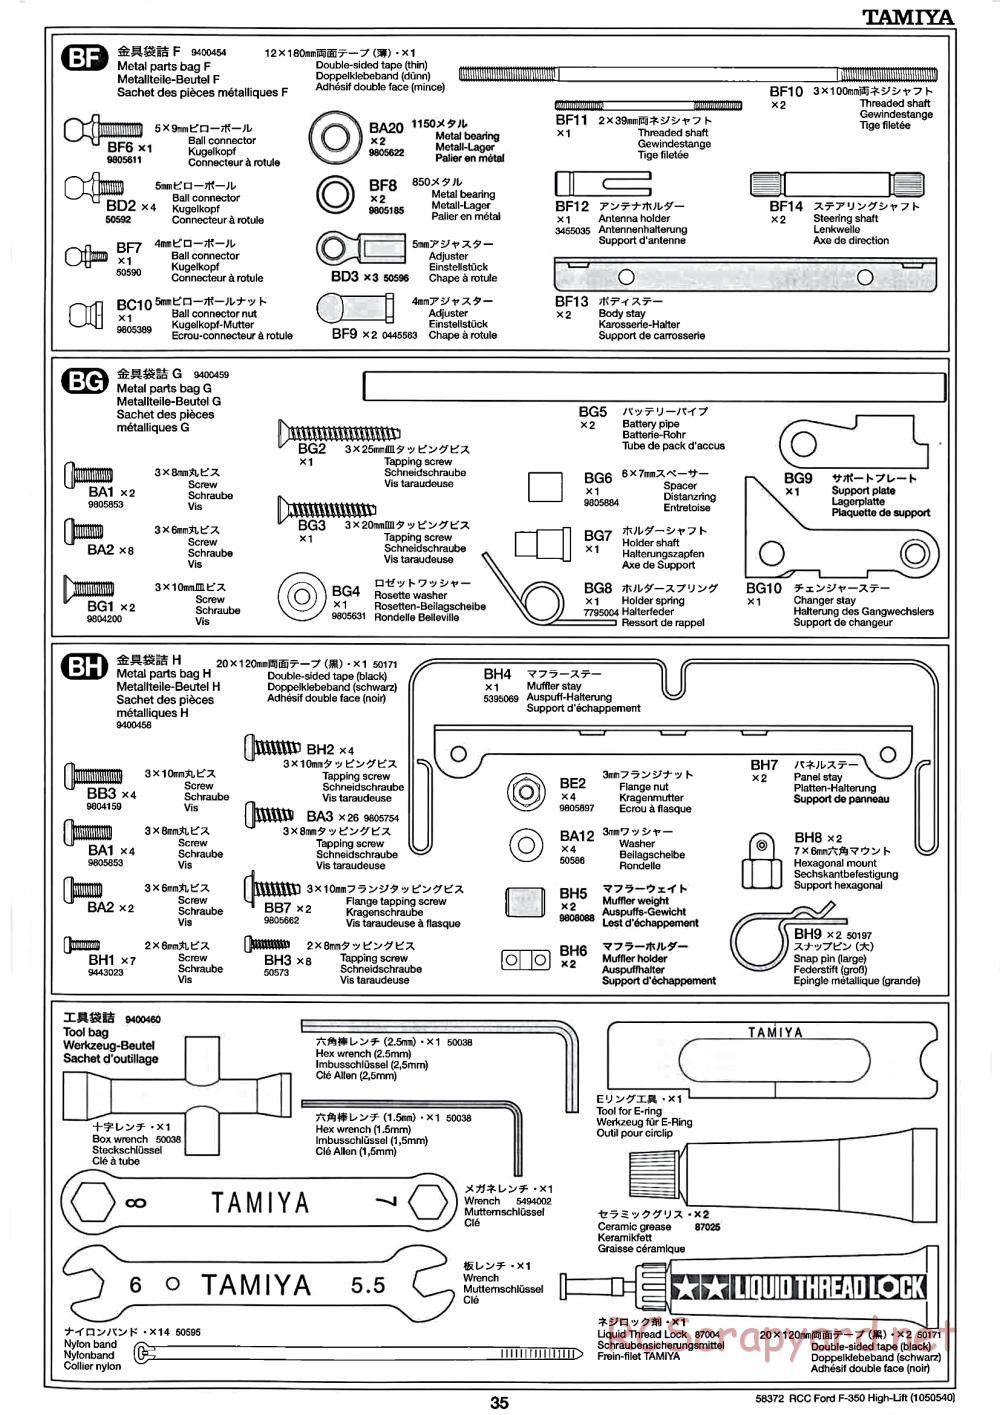 Tamiya - Ford F350 High-Lift Chassis - Manual - Page 35